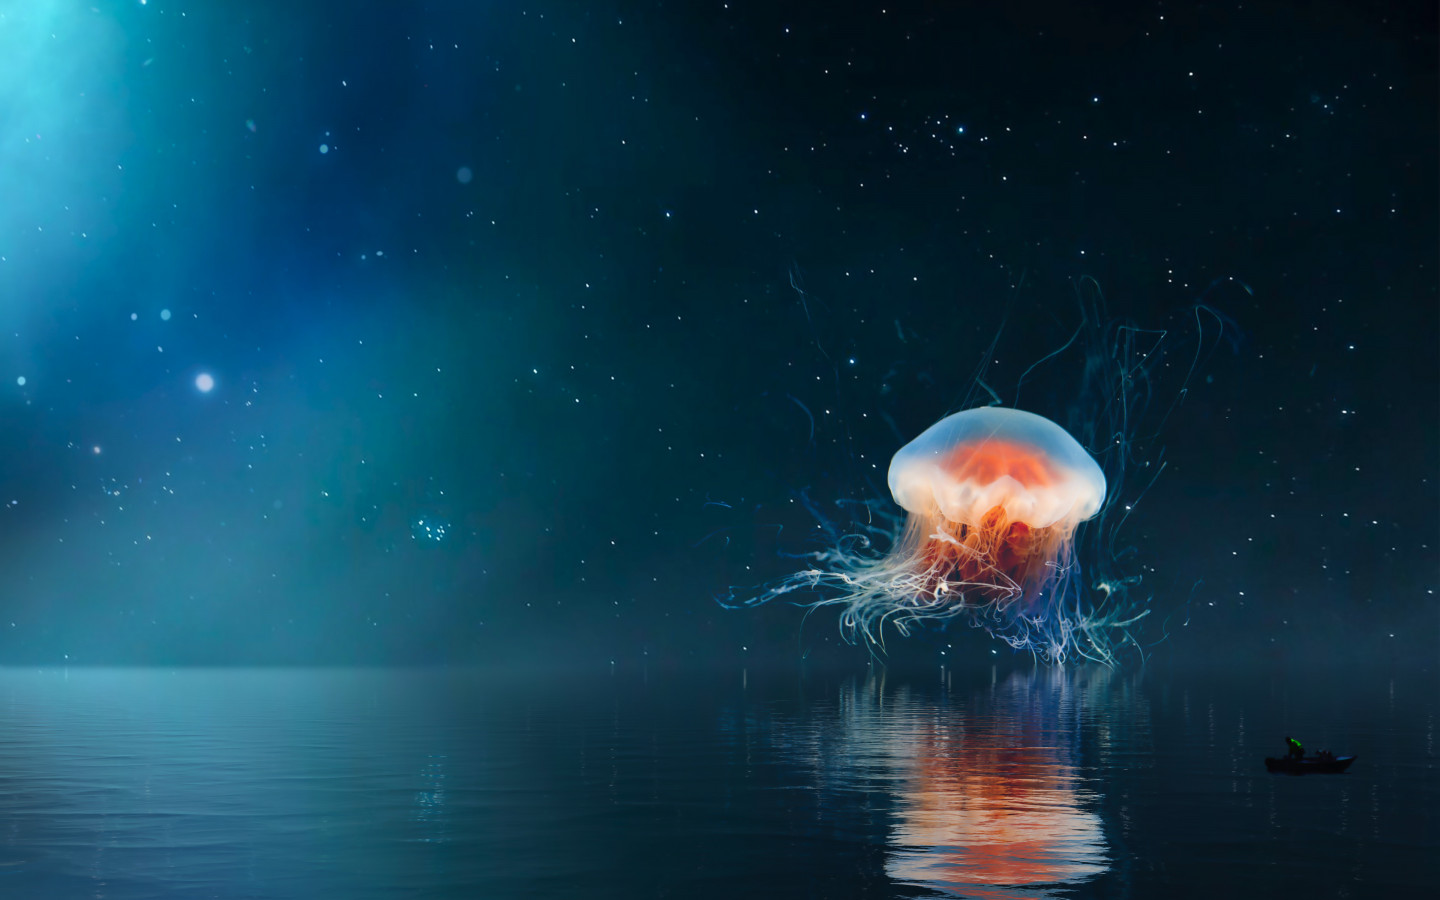 Jellyfish on the night sky wallpaper 1440x900